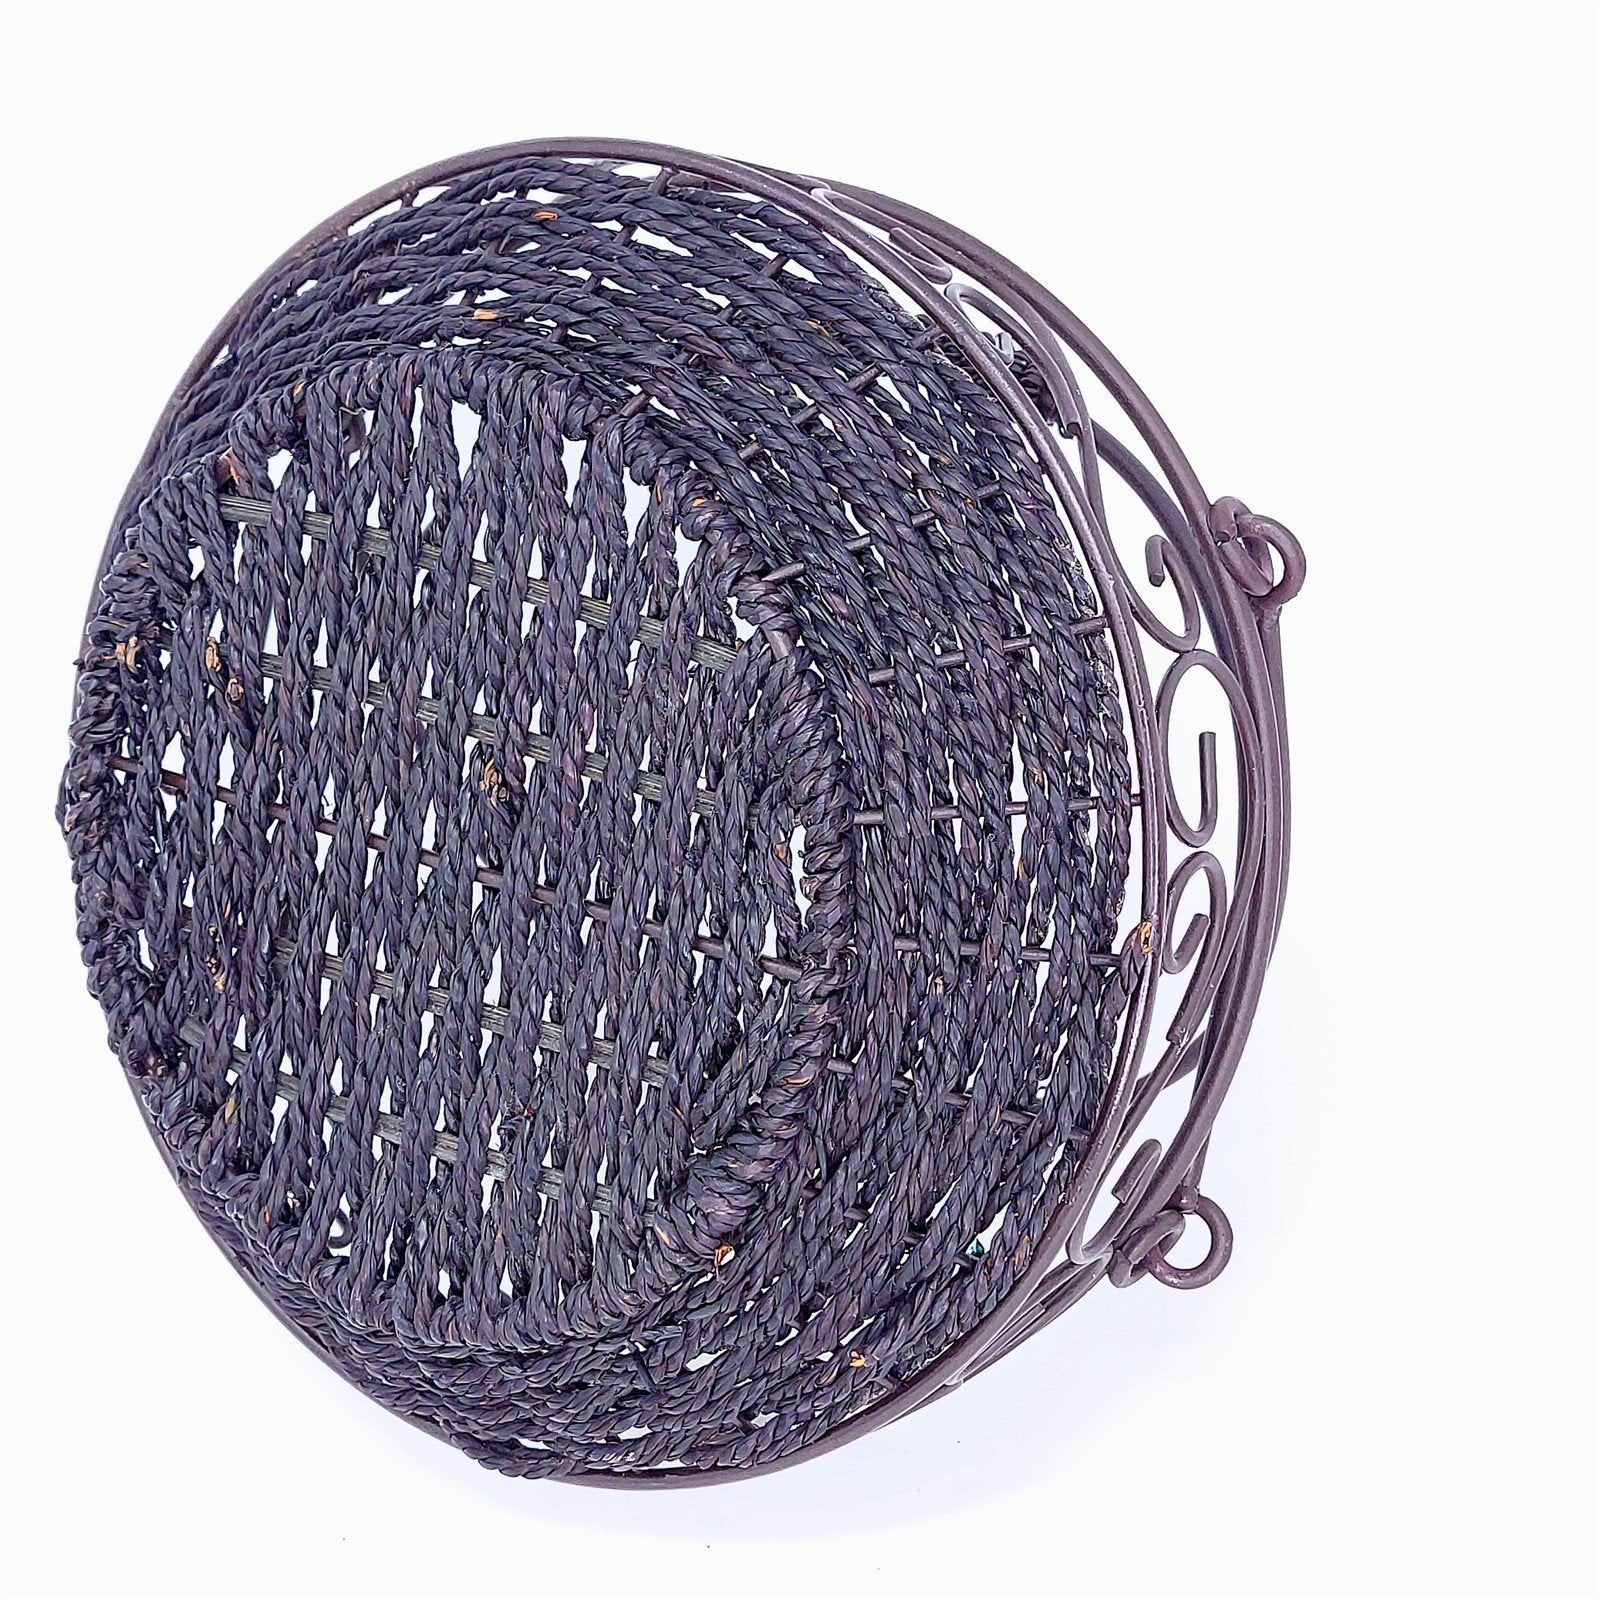 Basket Tote Planter Centerpiece Metal Wicker Double Folding Handle Vintage Decor